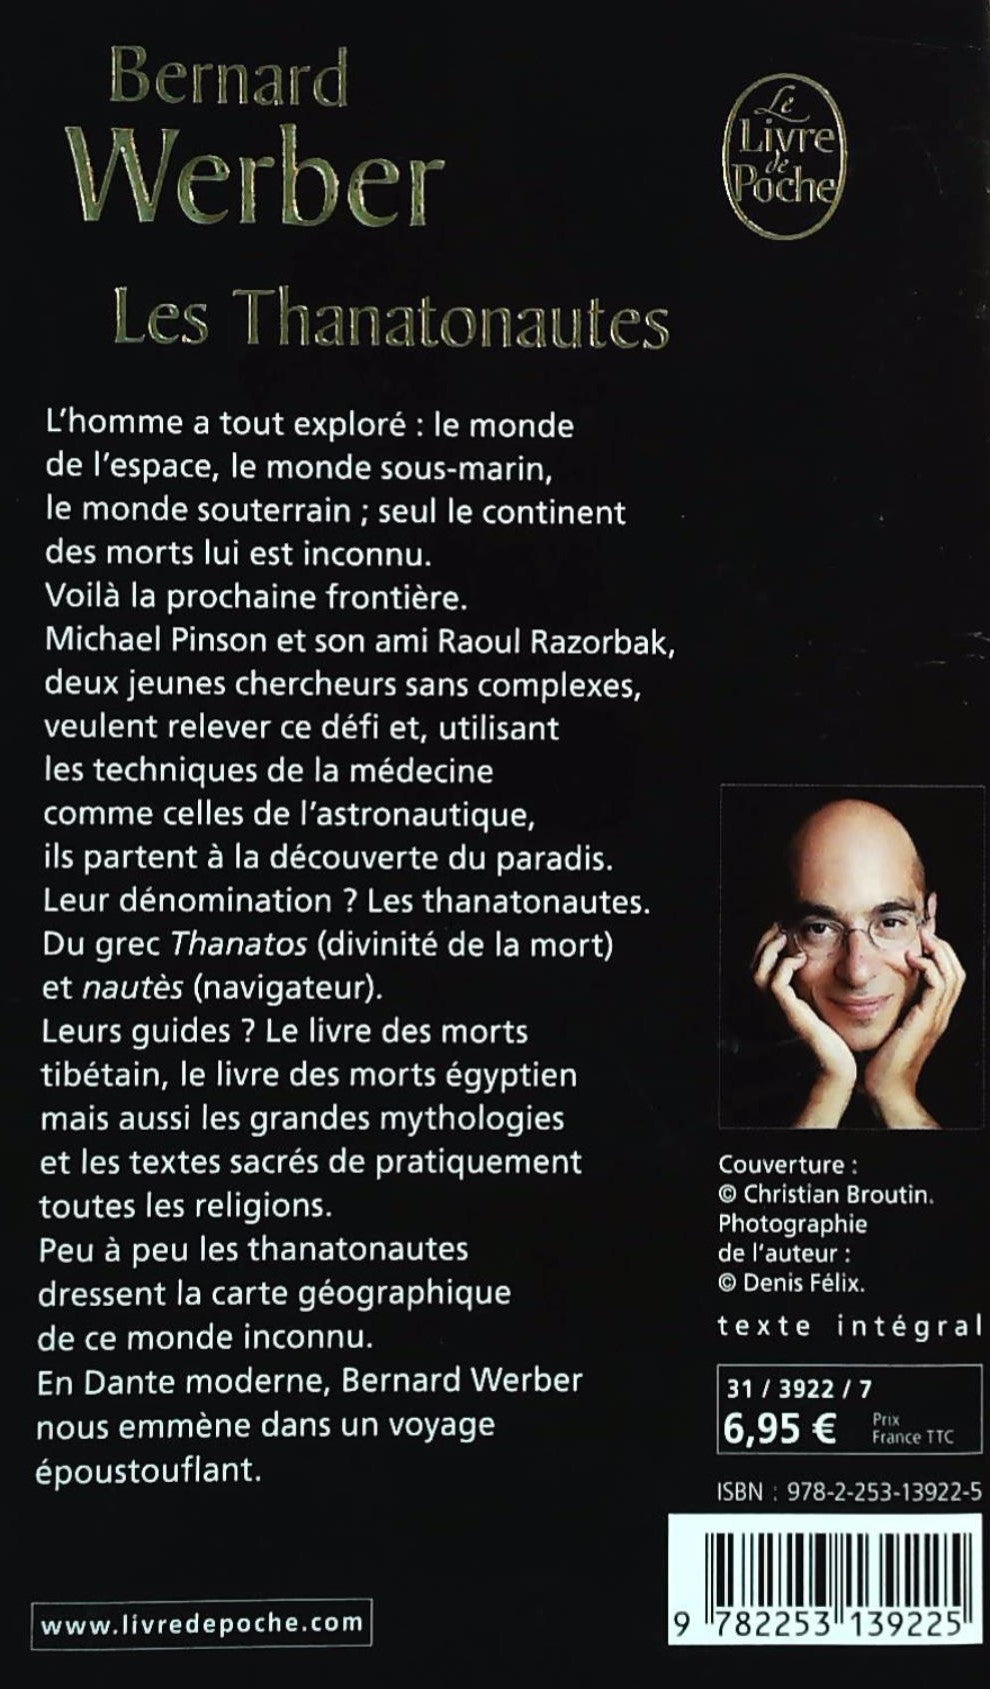 Les Thanatonautes (Bernard Werber)